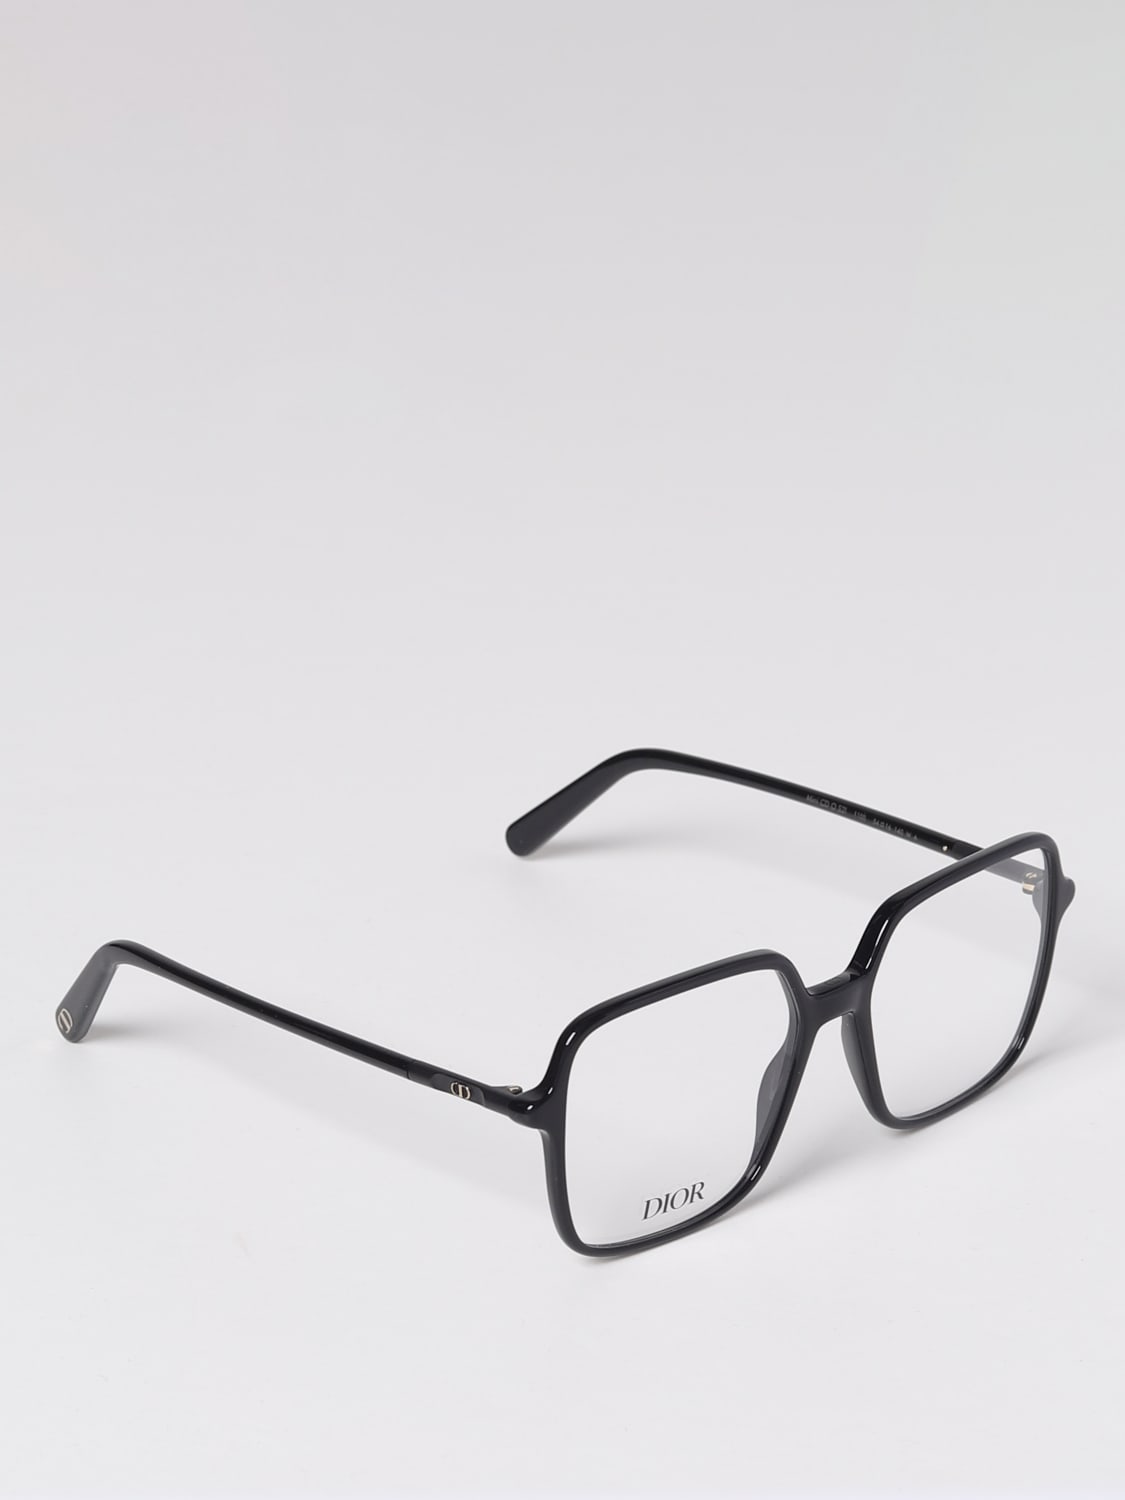 DIOR: Gafas de vista hombre, Negro | Gafas De Vista MINI CD O S2I en línea en GIGLIO.COM